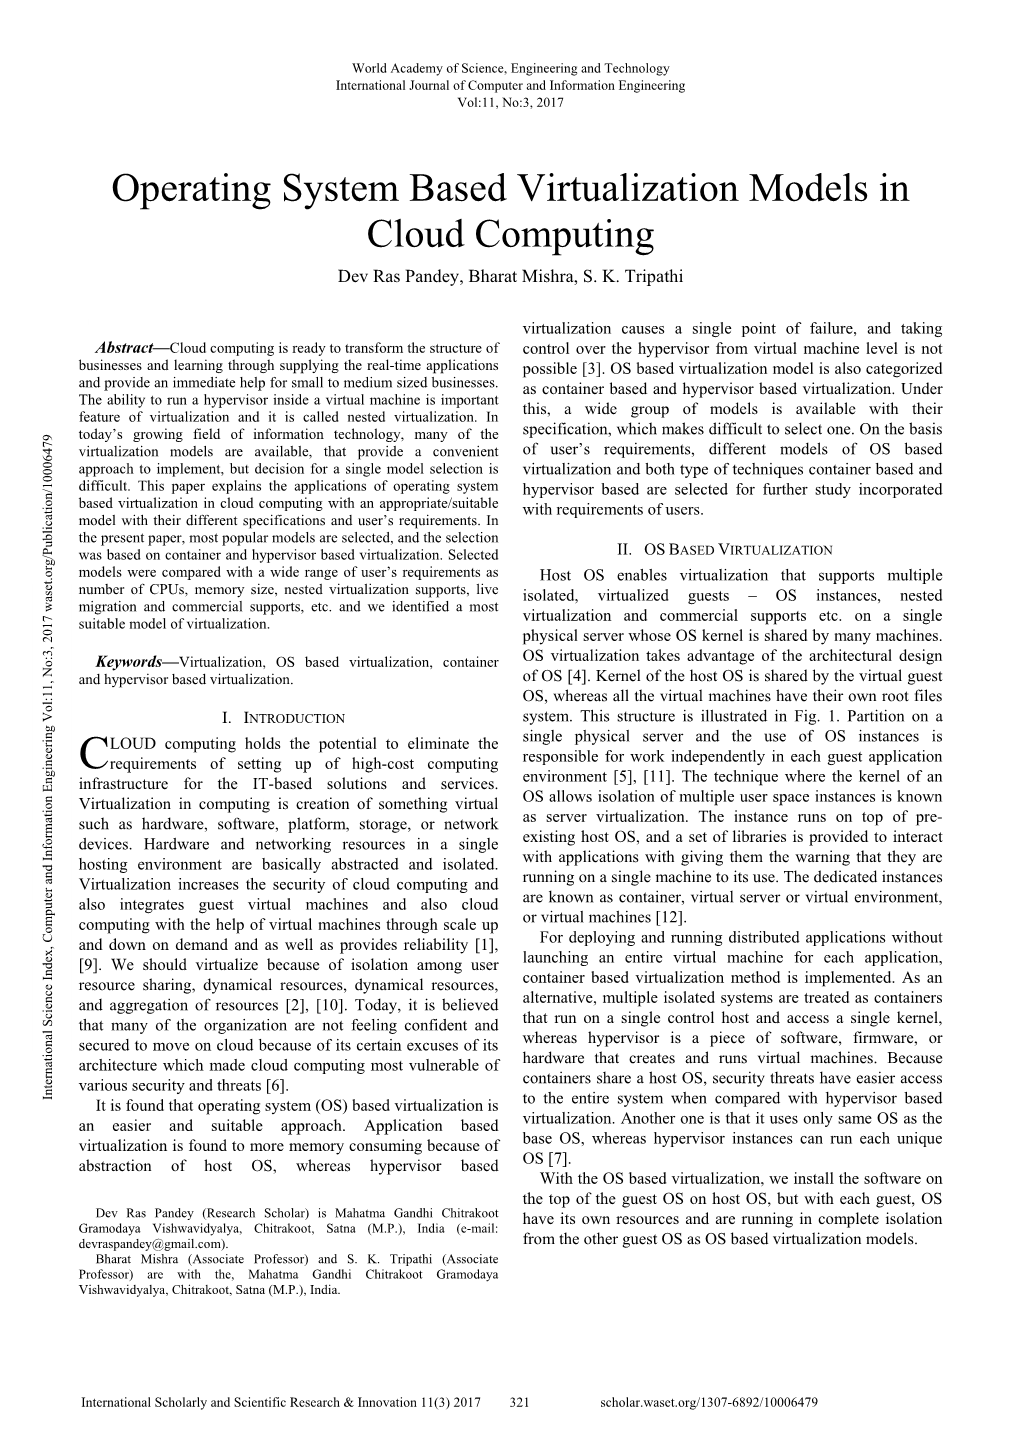 Operating System Based Virtualization Models in Cloud Computing Dev Ras Pandey, Bharat Mishra, S